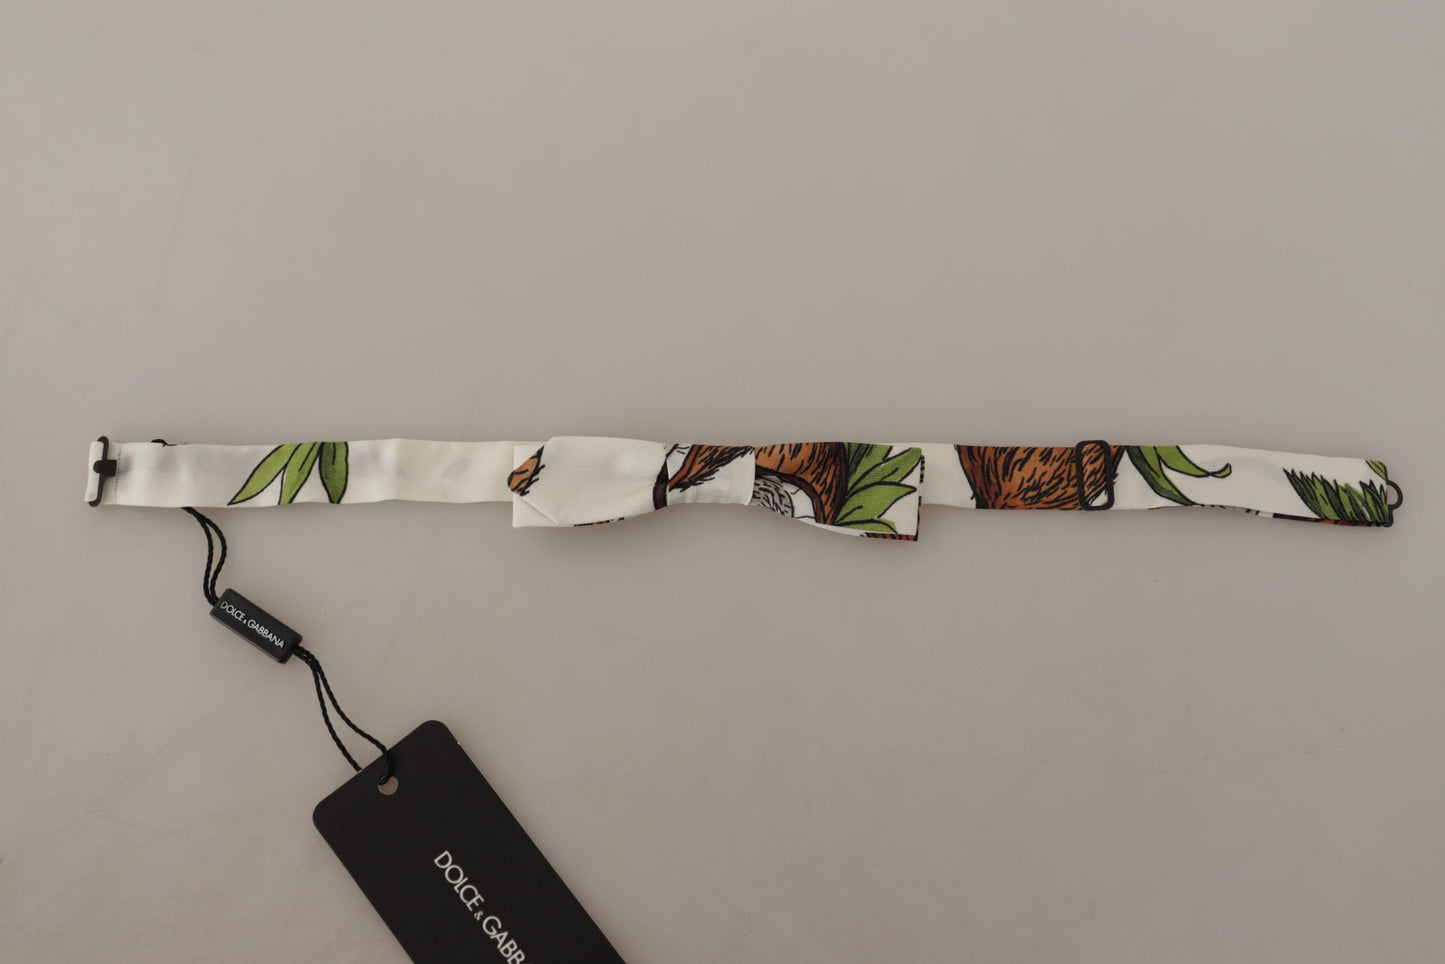 Dolce & Gabbana White Pattern Silk Adjustable Neck Papillon Bow Tie